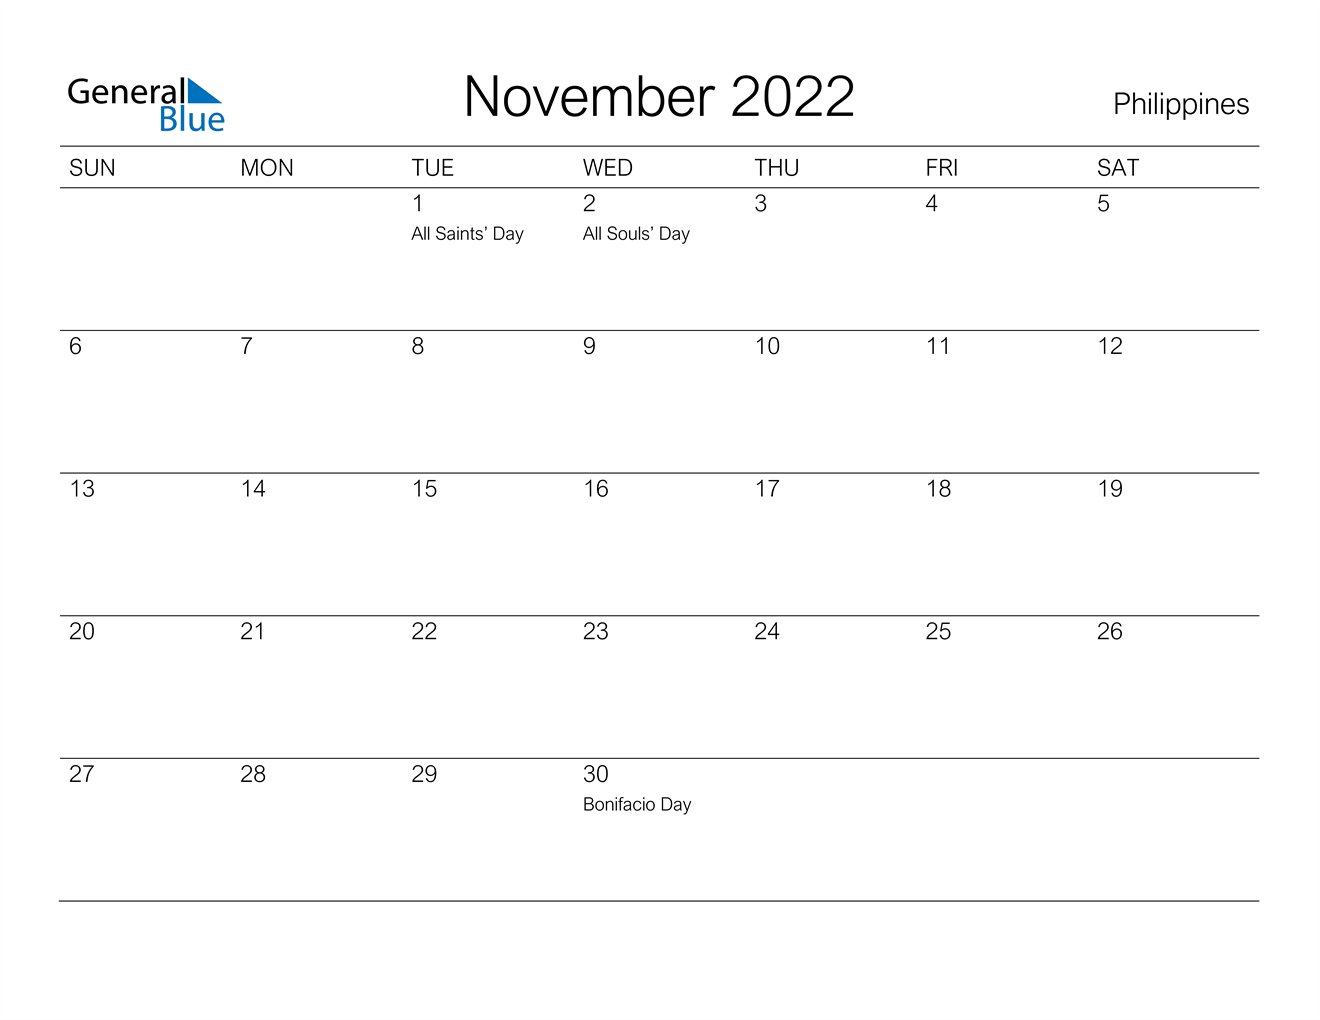 south-kent-state-calendar-september-october-november-2022-calendar